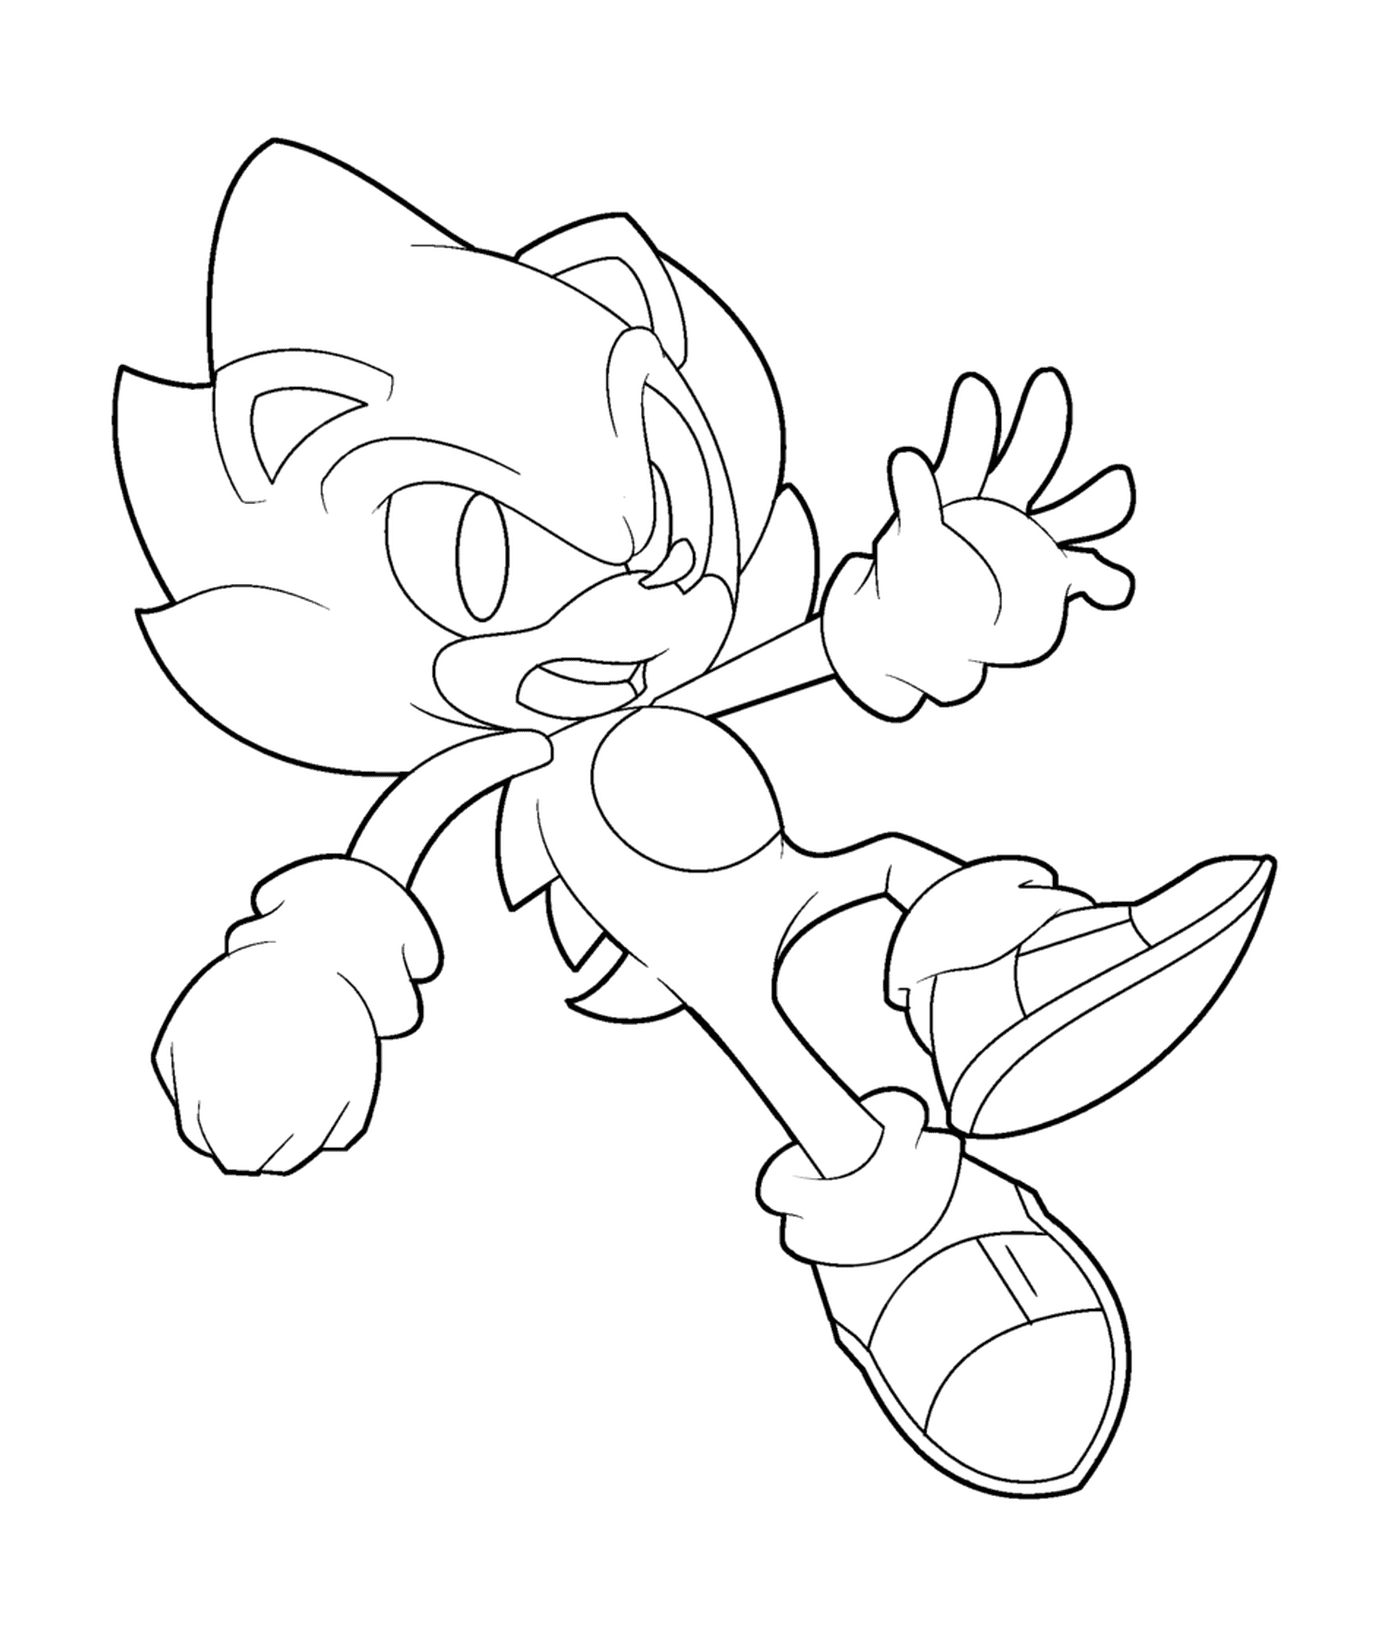  Super energetic Sonic 